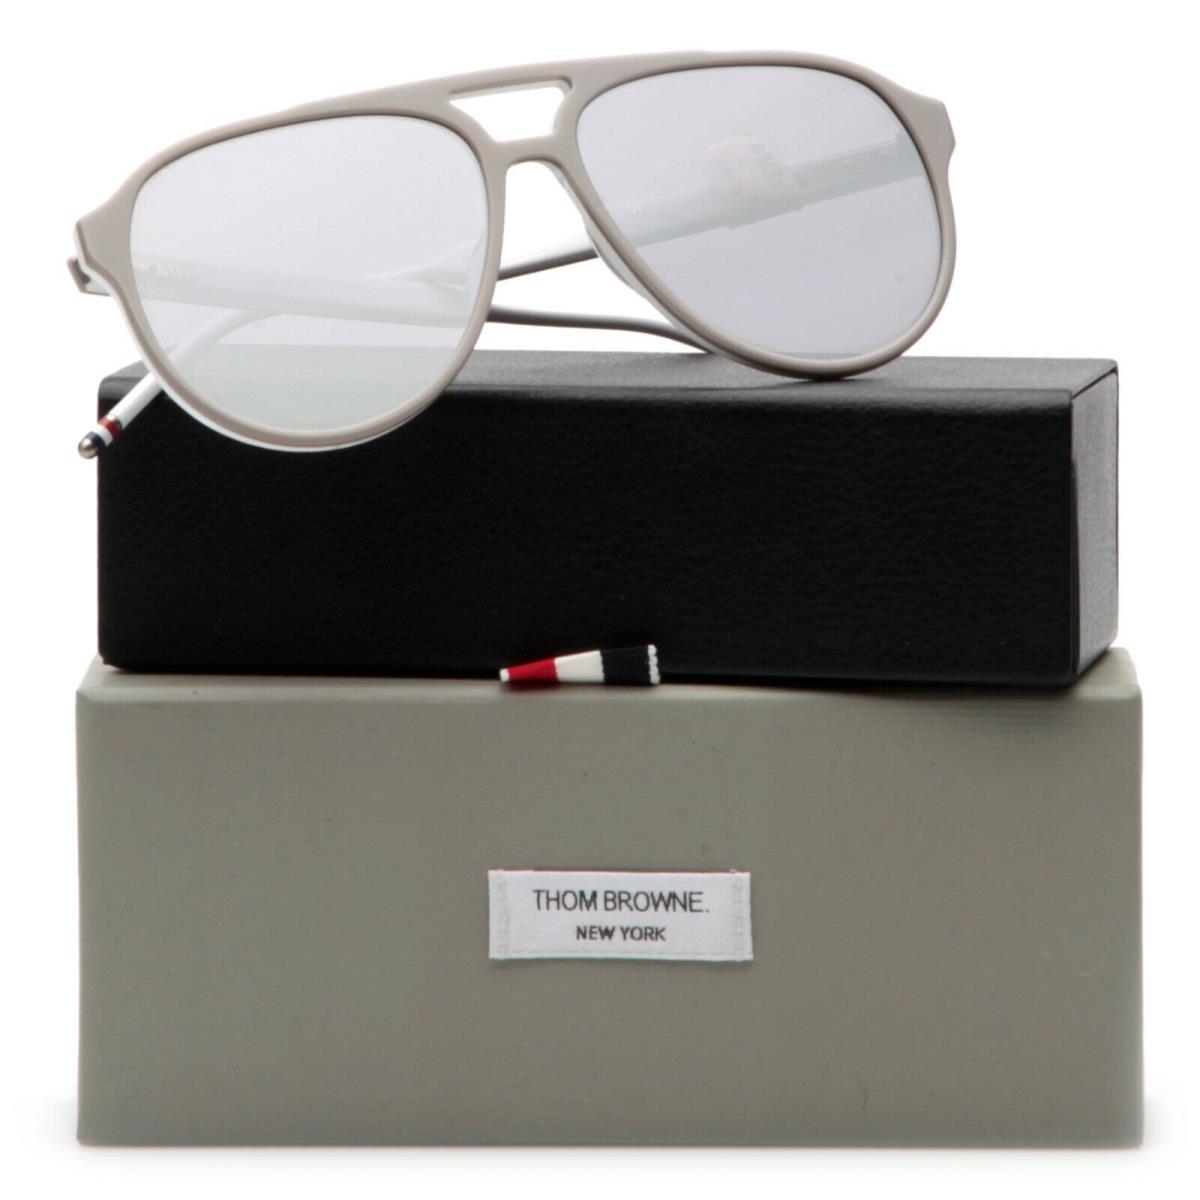 Thom Browne TBS408-63-02 Gry-wht Grey White Sunglasses